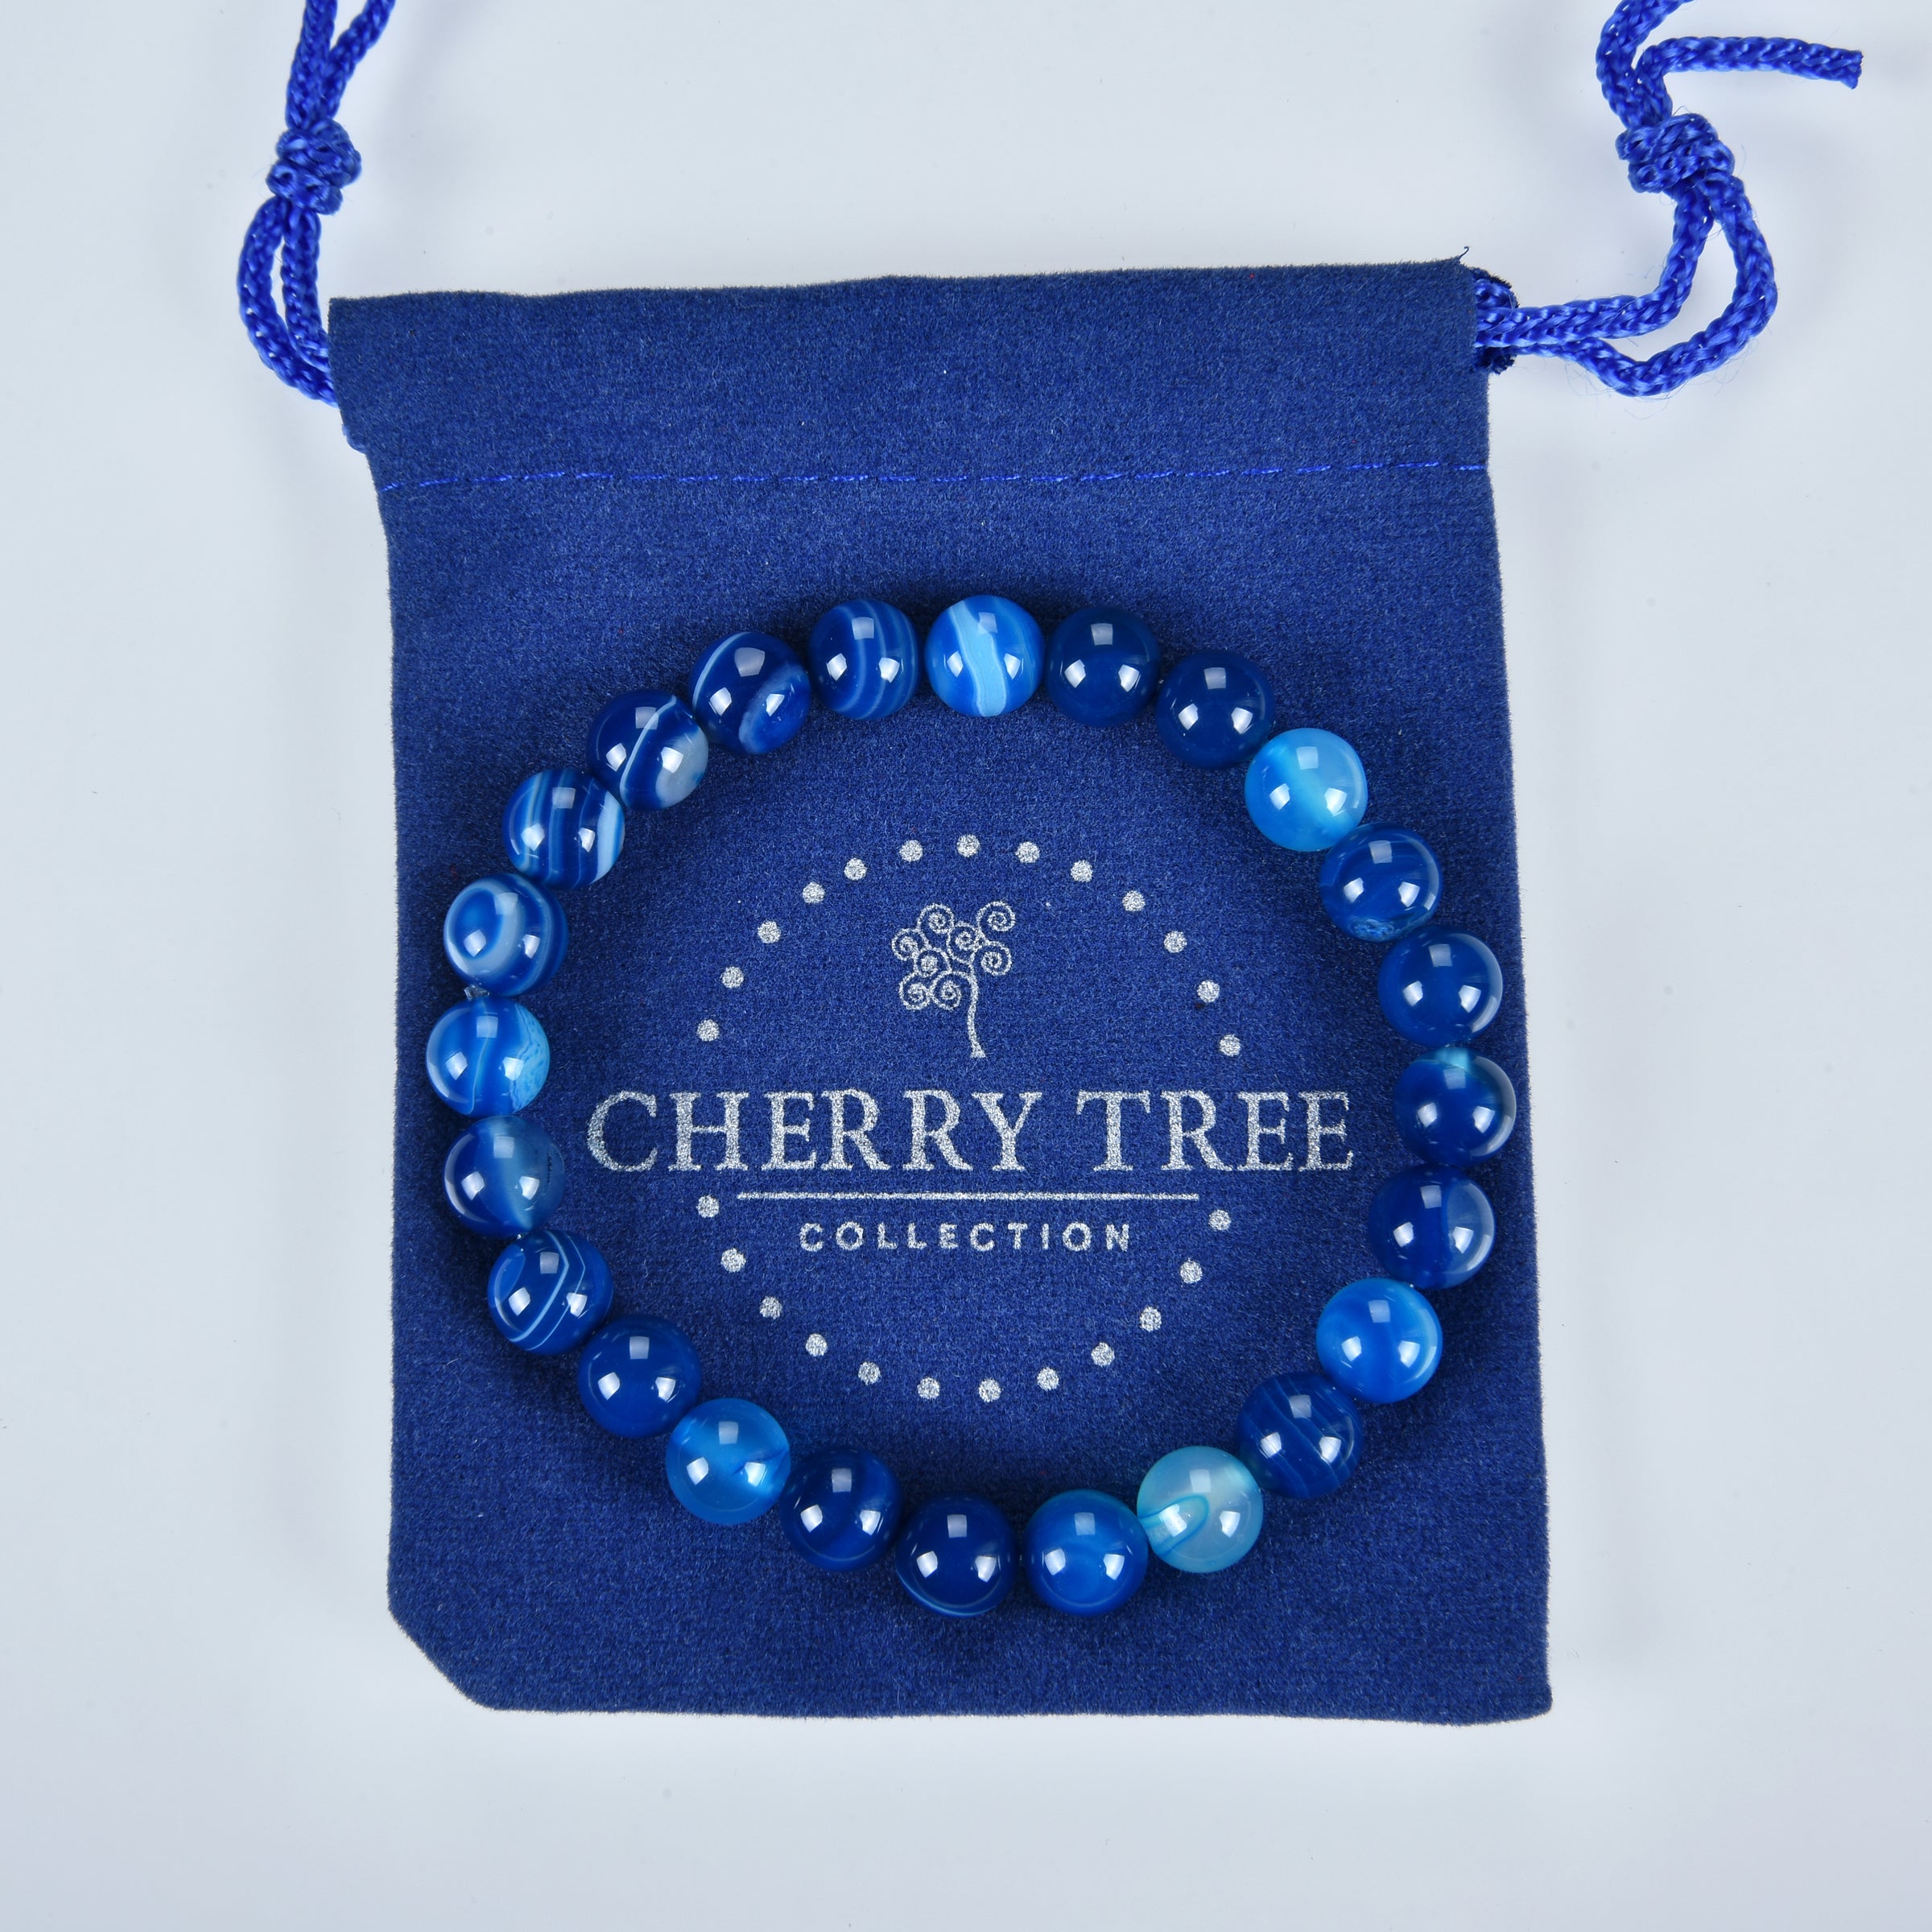 Stretch Bracelet | 8mm Beads (Lace Agate - Blue)